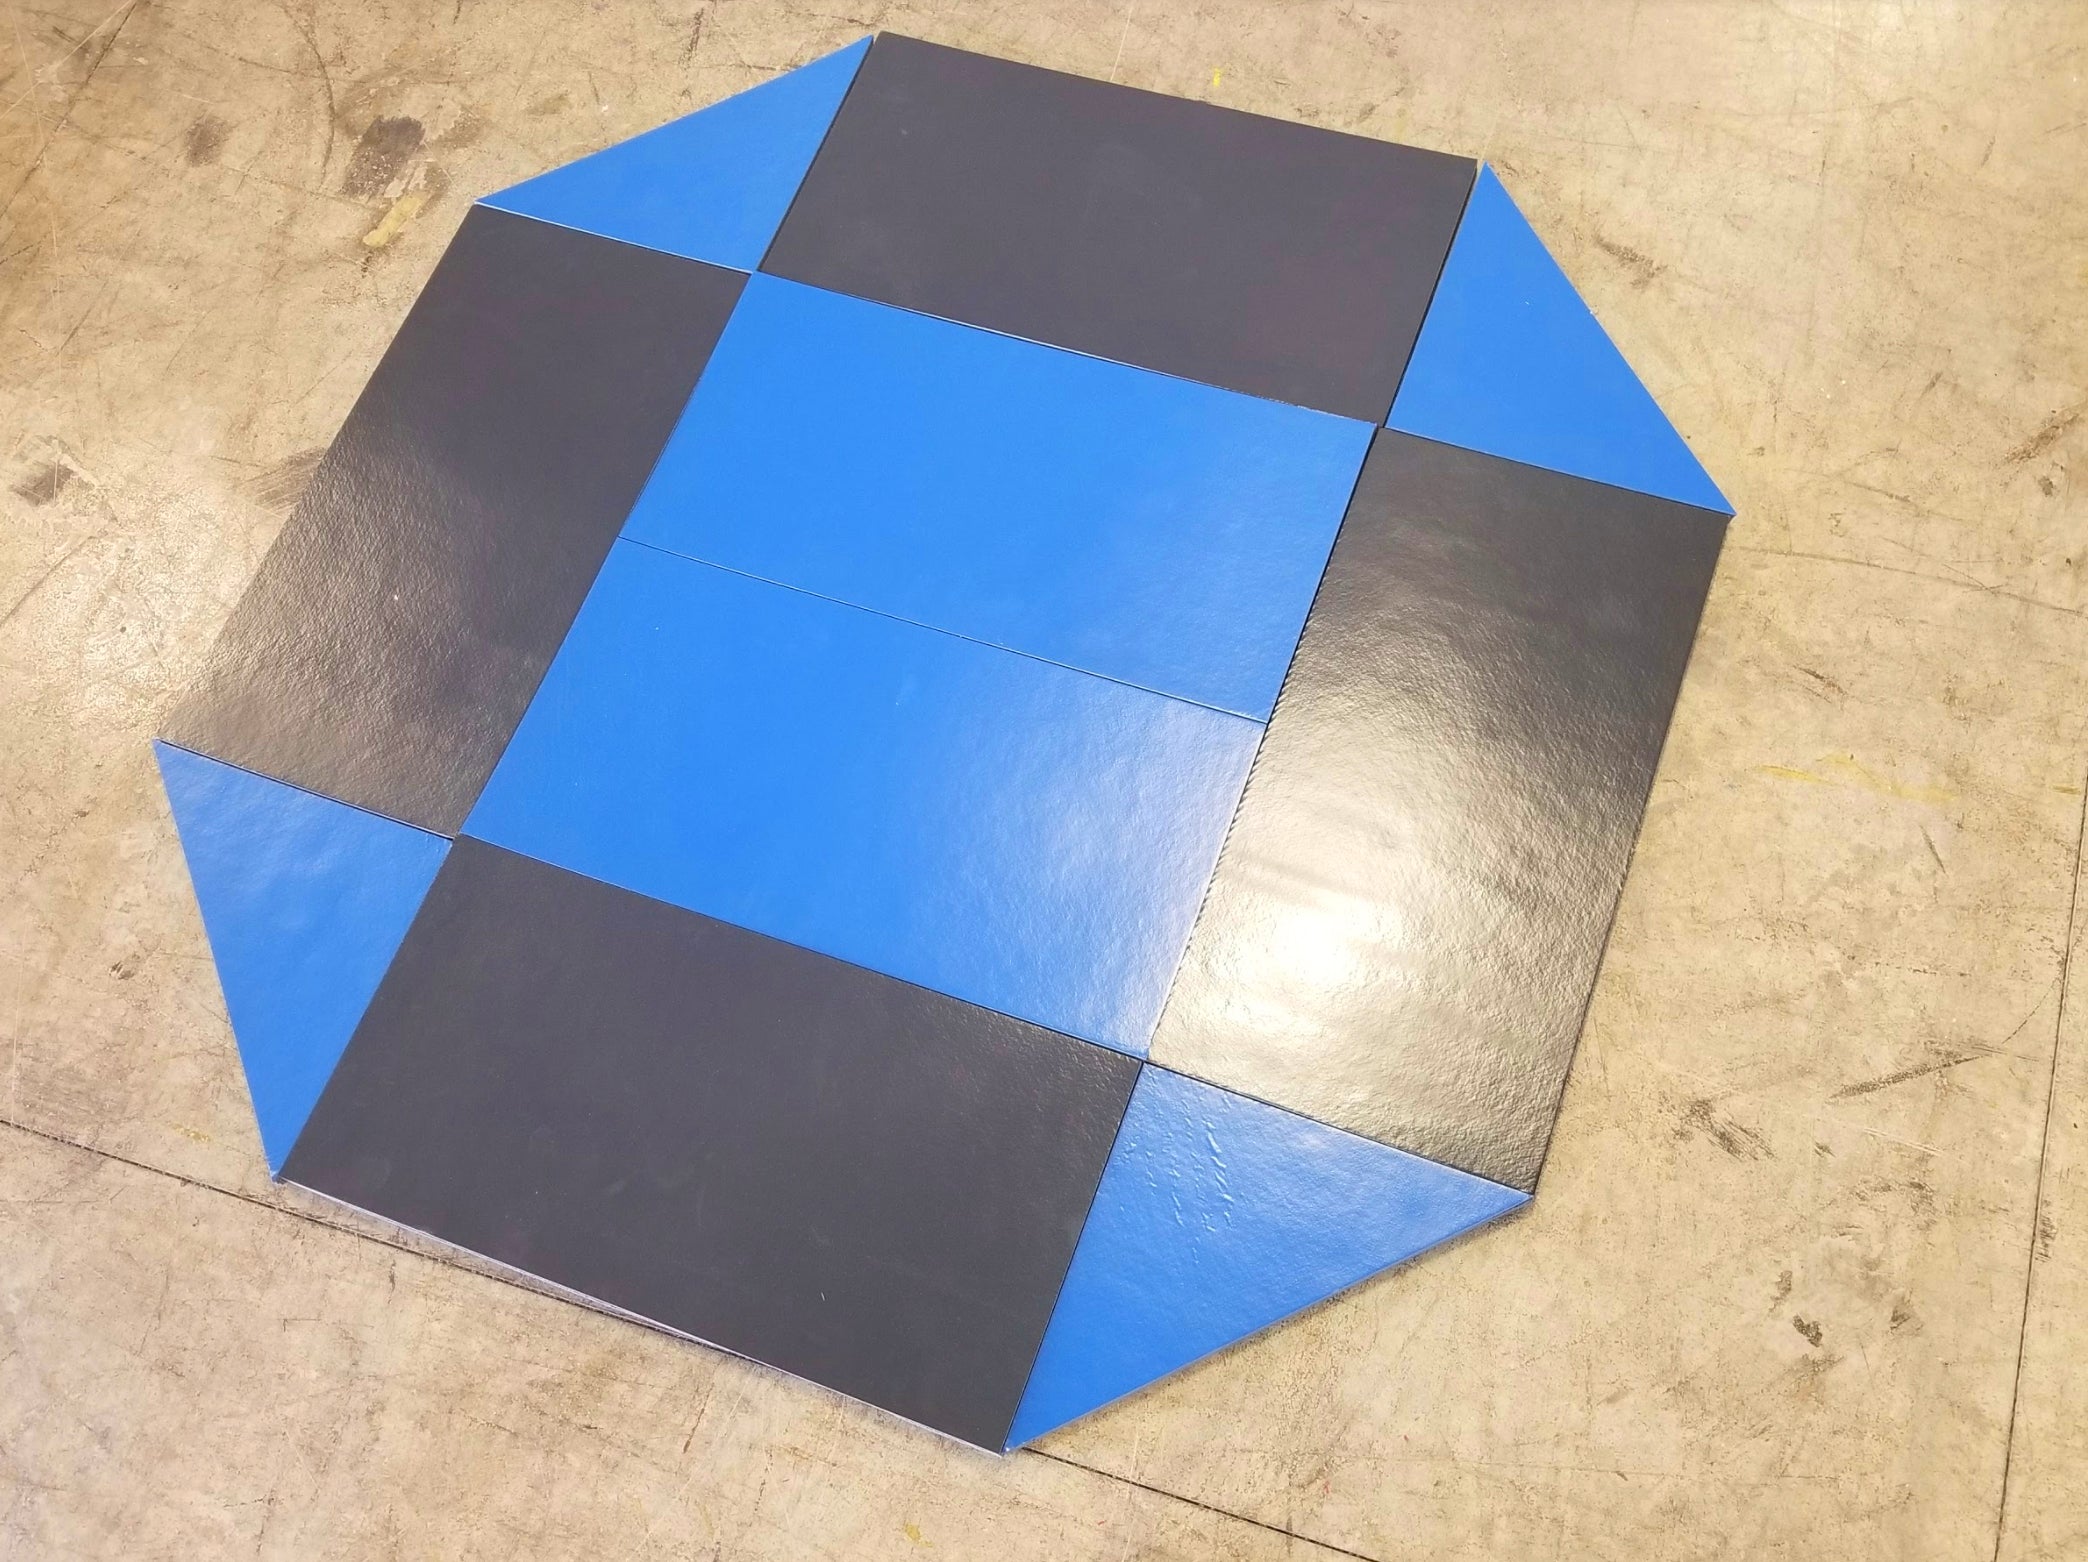 8' x 8' remnant octagon wrestling mat Black and Blue